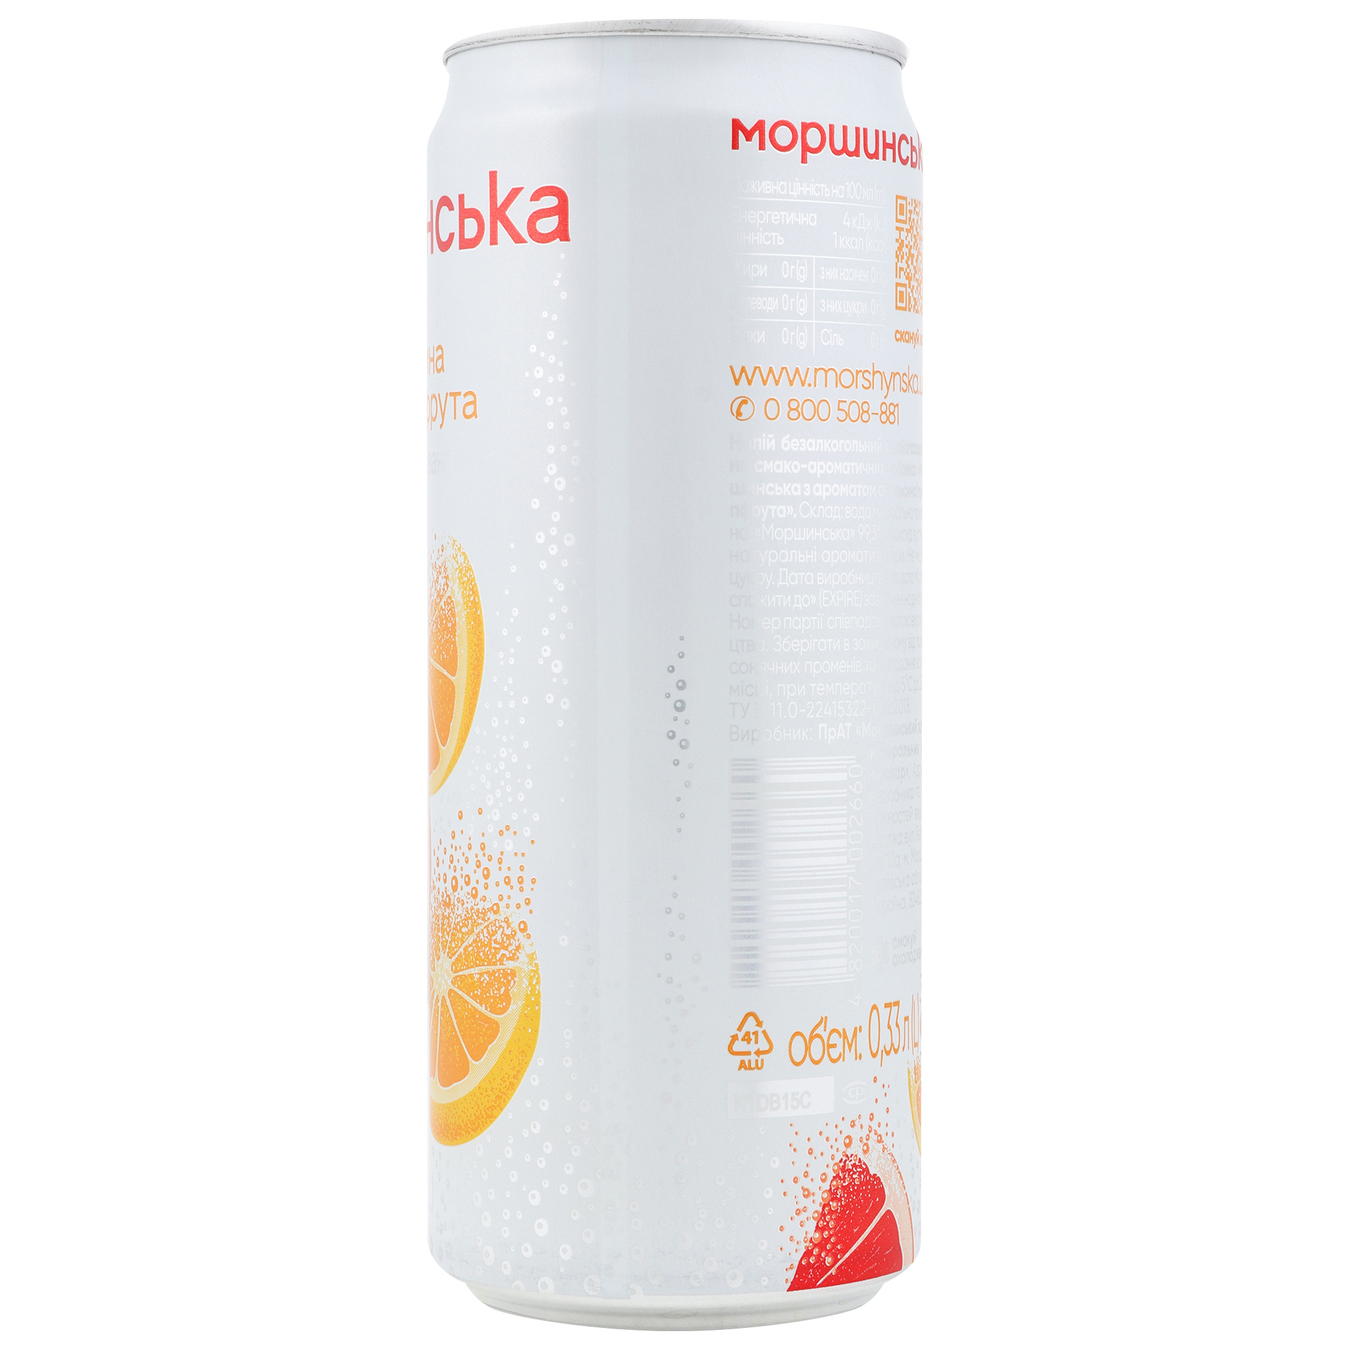 Morshynska orange-grapefruit slightly carbonated water 0.33l 2